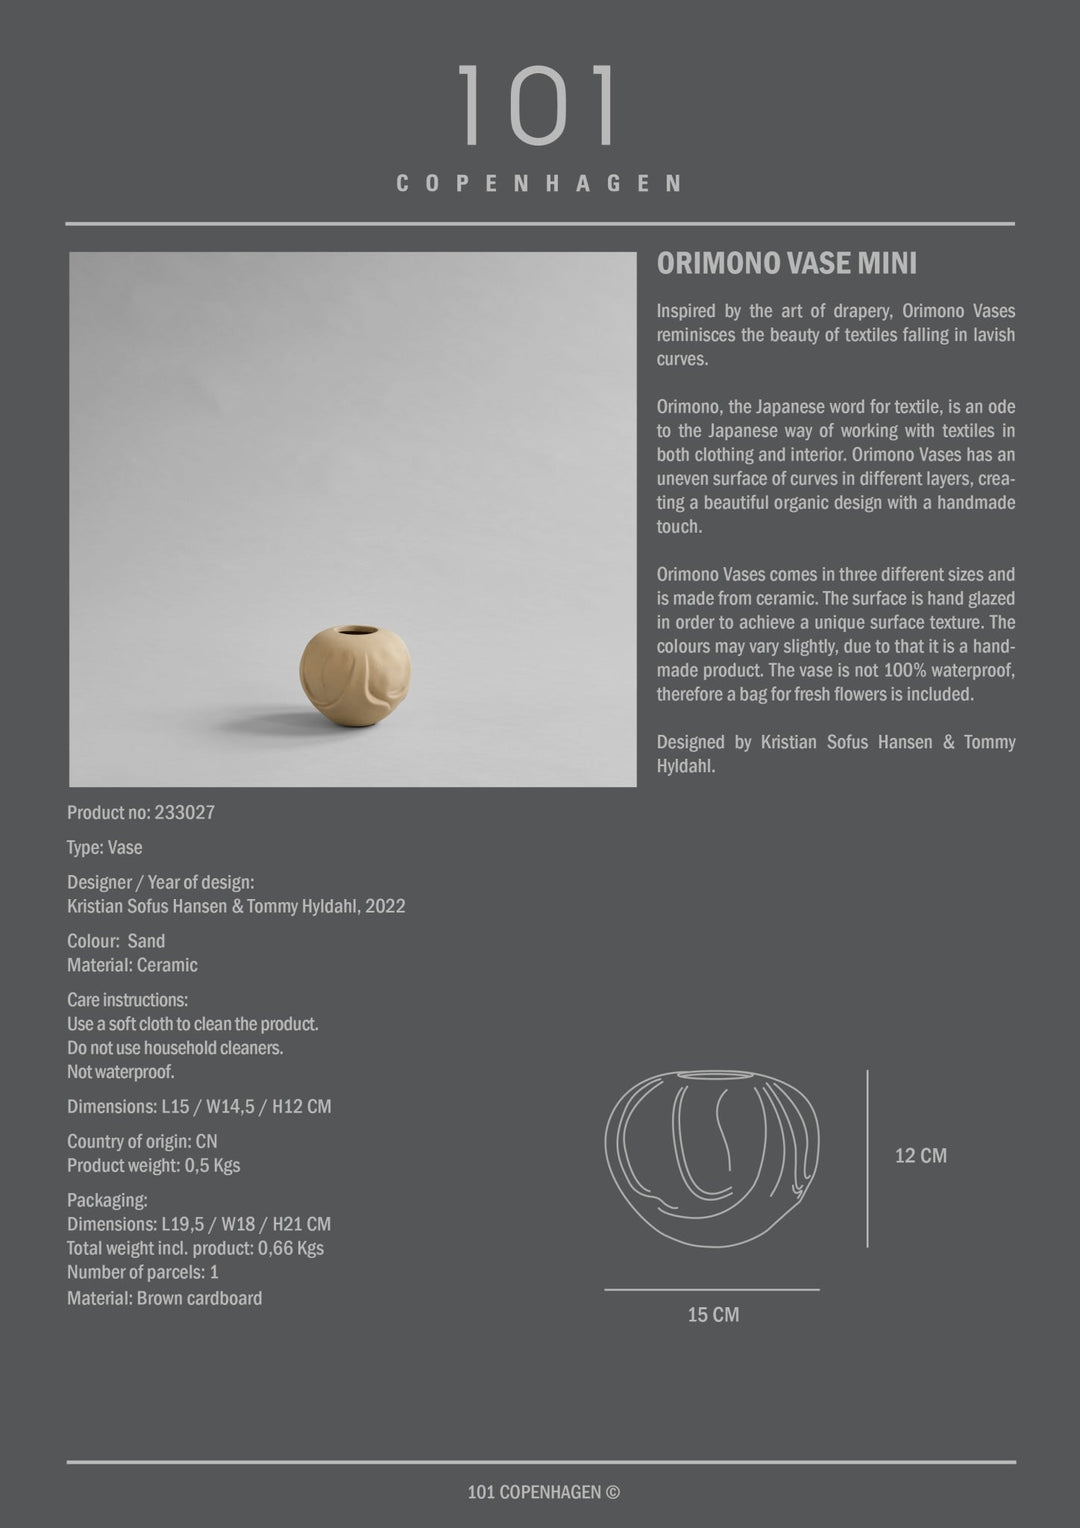 101 Copenhagen Orimono Vase - $85.00 - $645.00